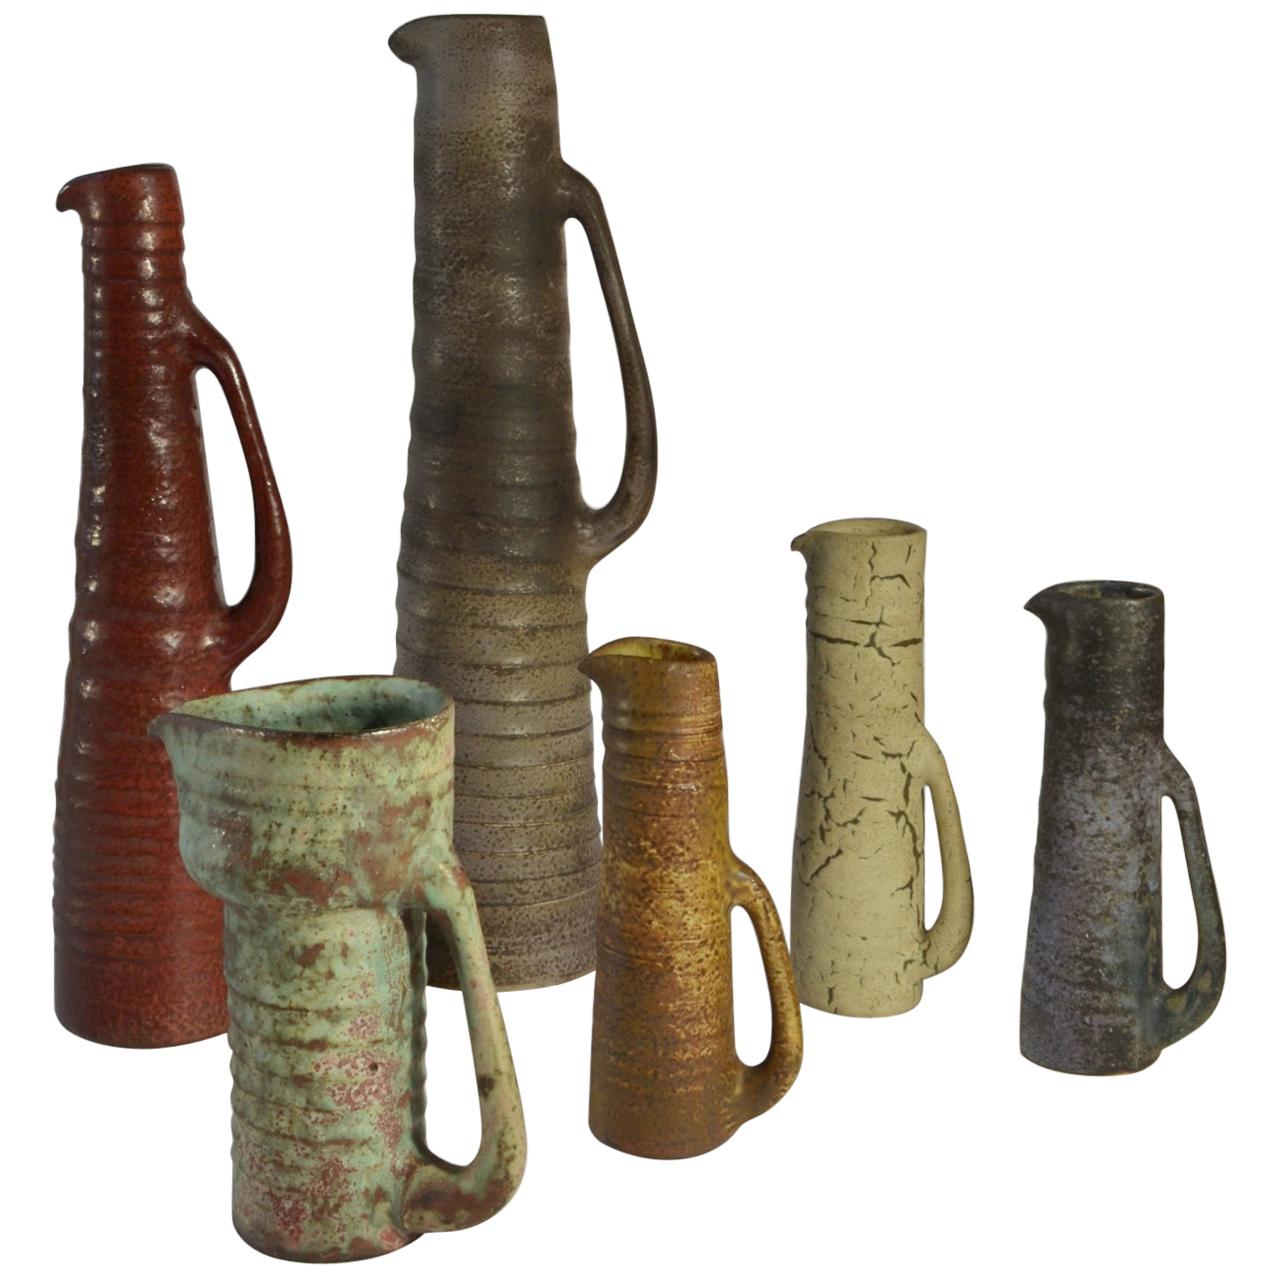 Group of Six Whimsical Mid Century Ceramic Studio Vases in Earth Tones